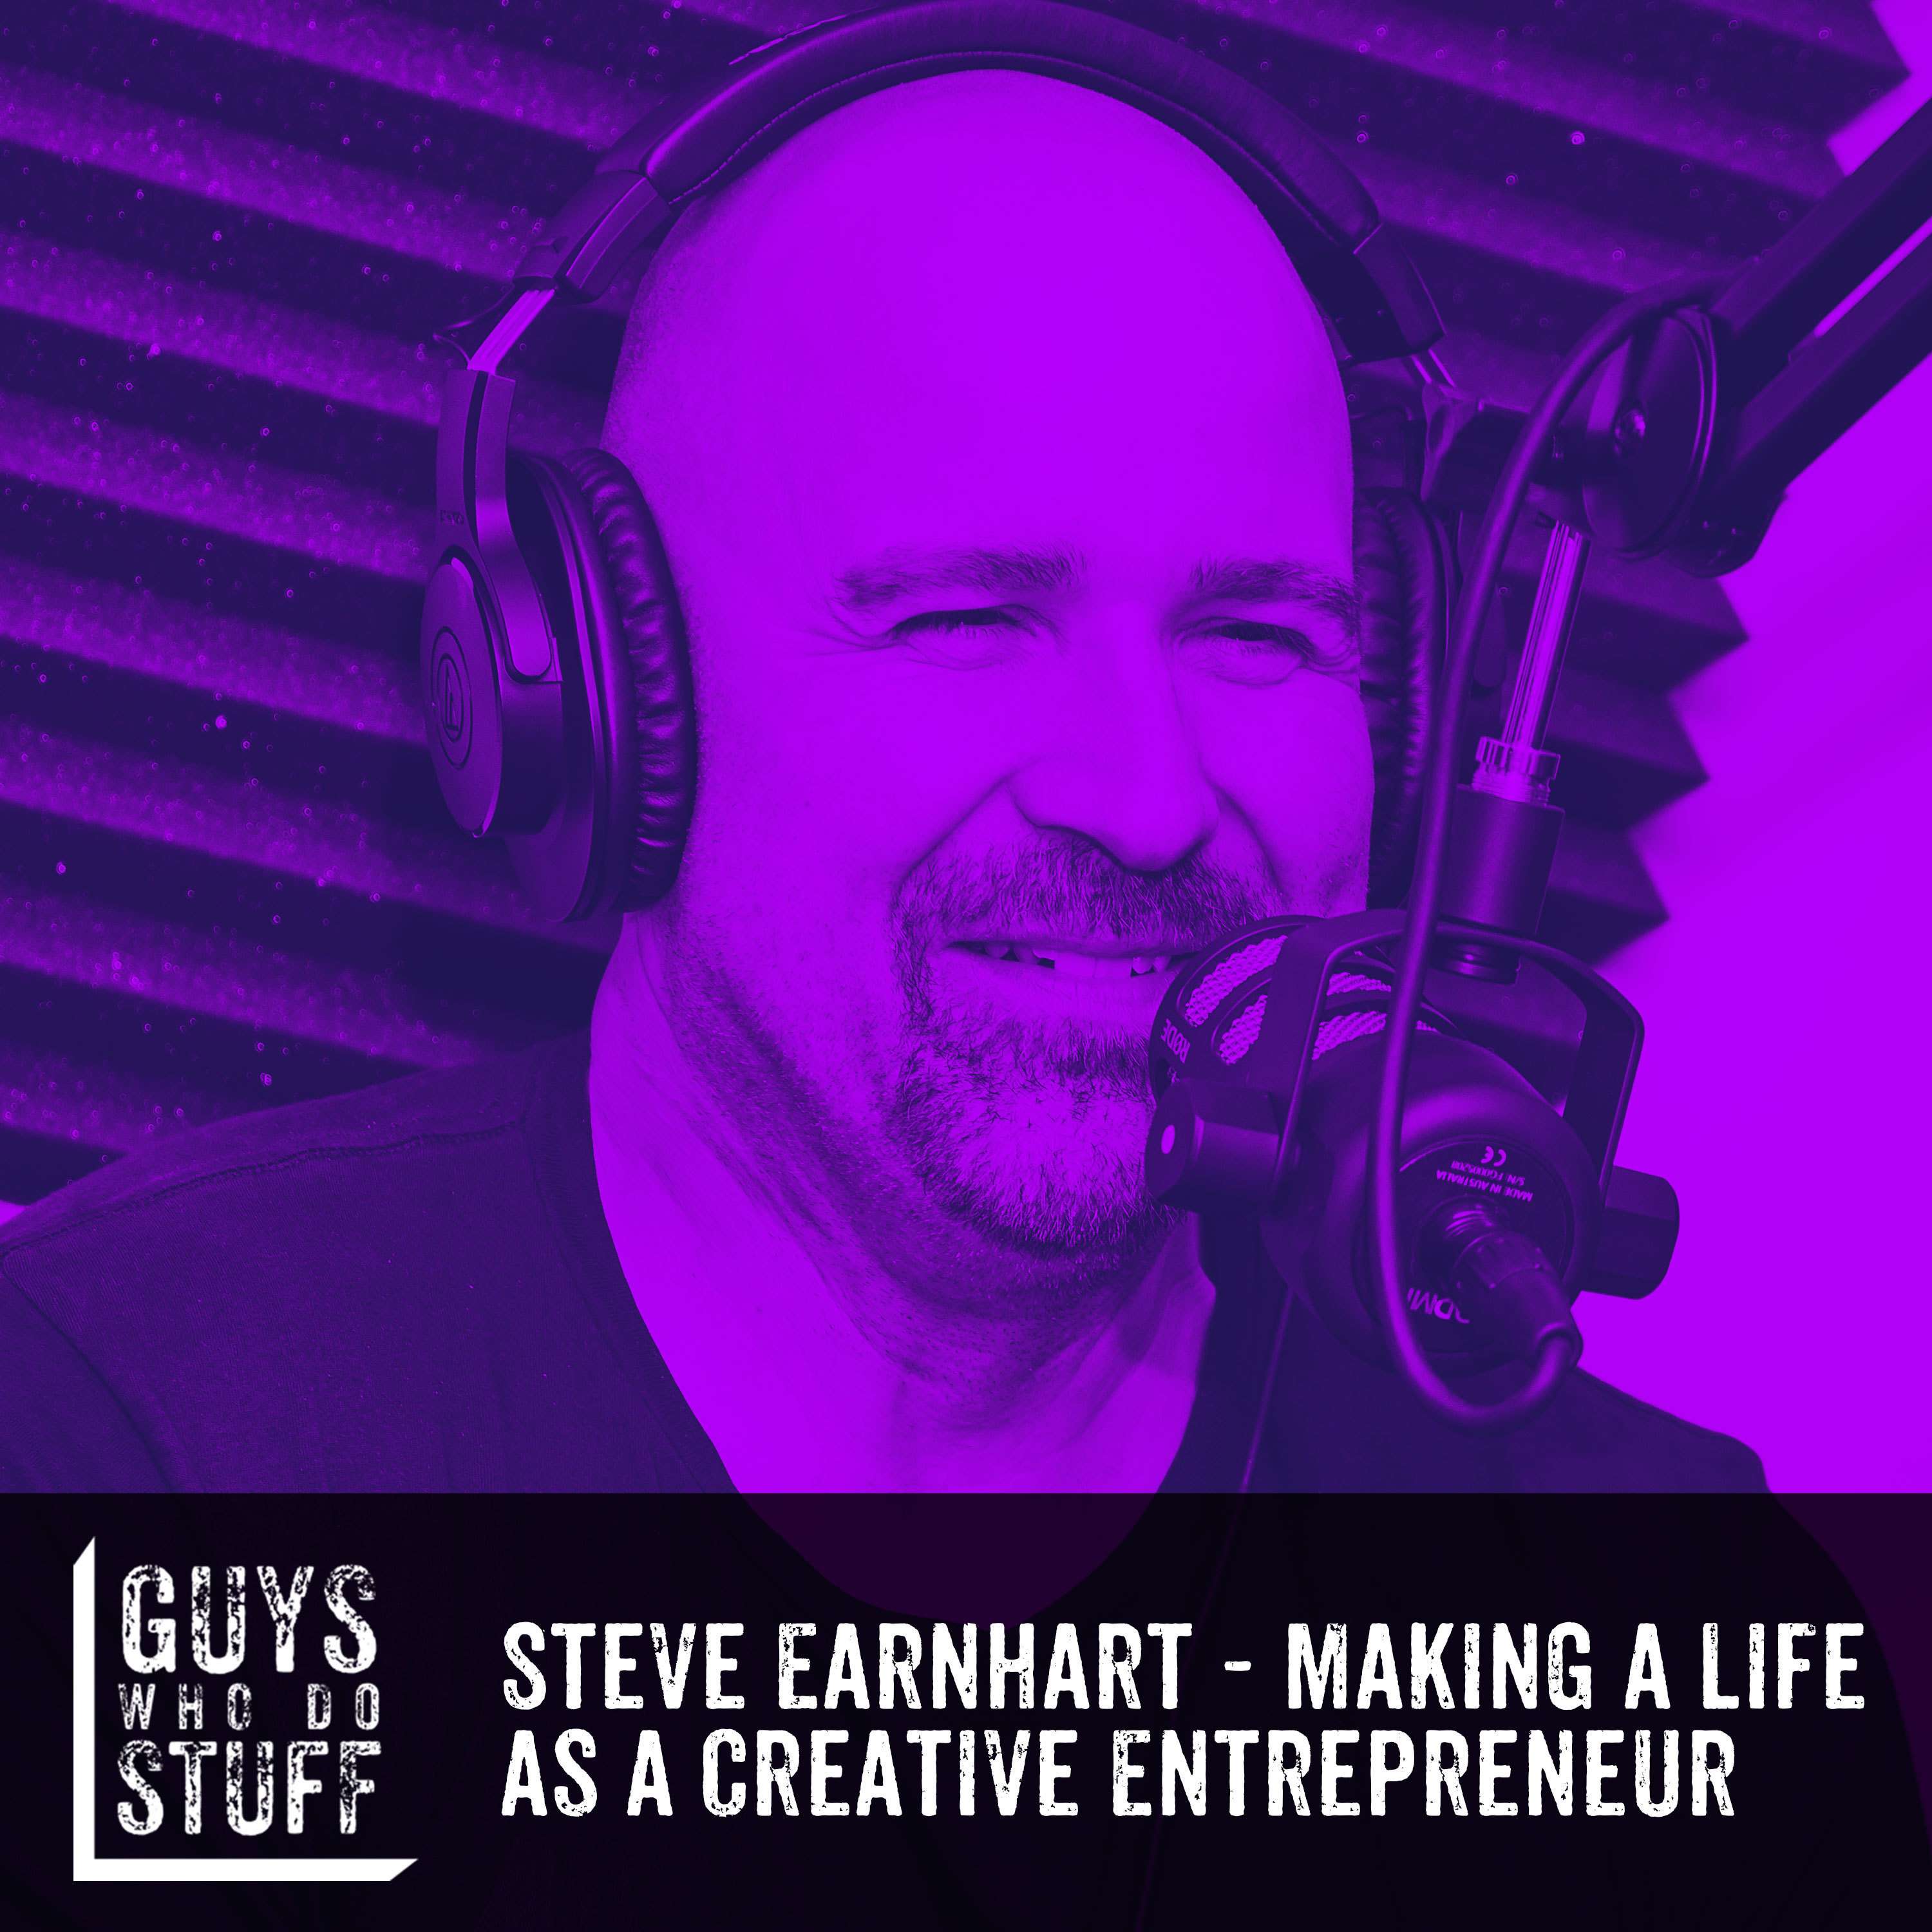 Steve Earnhart - Making a Life as a Creative Entrepreneur